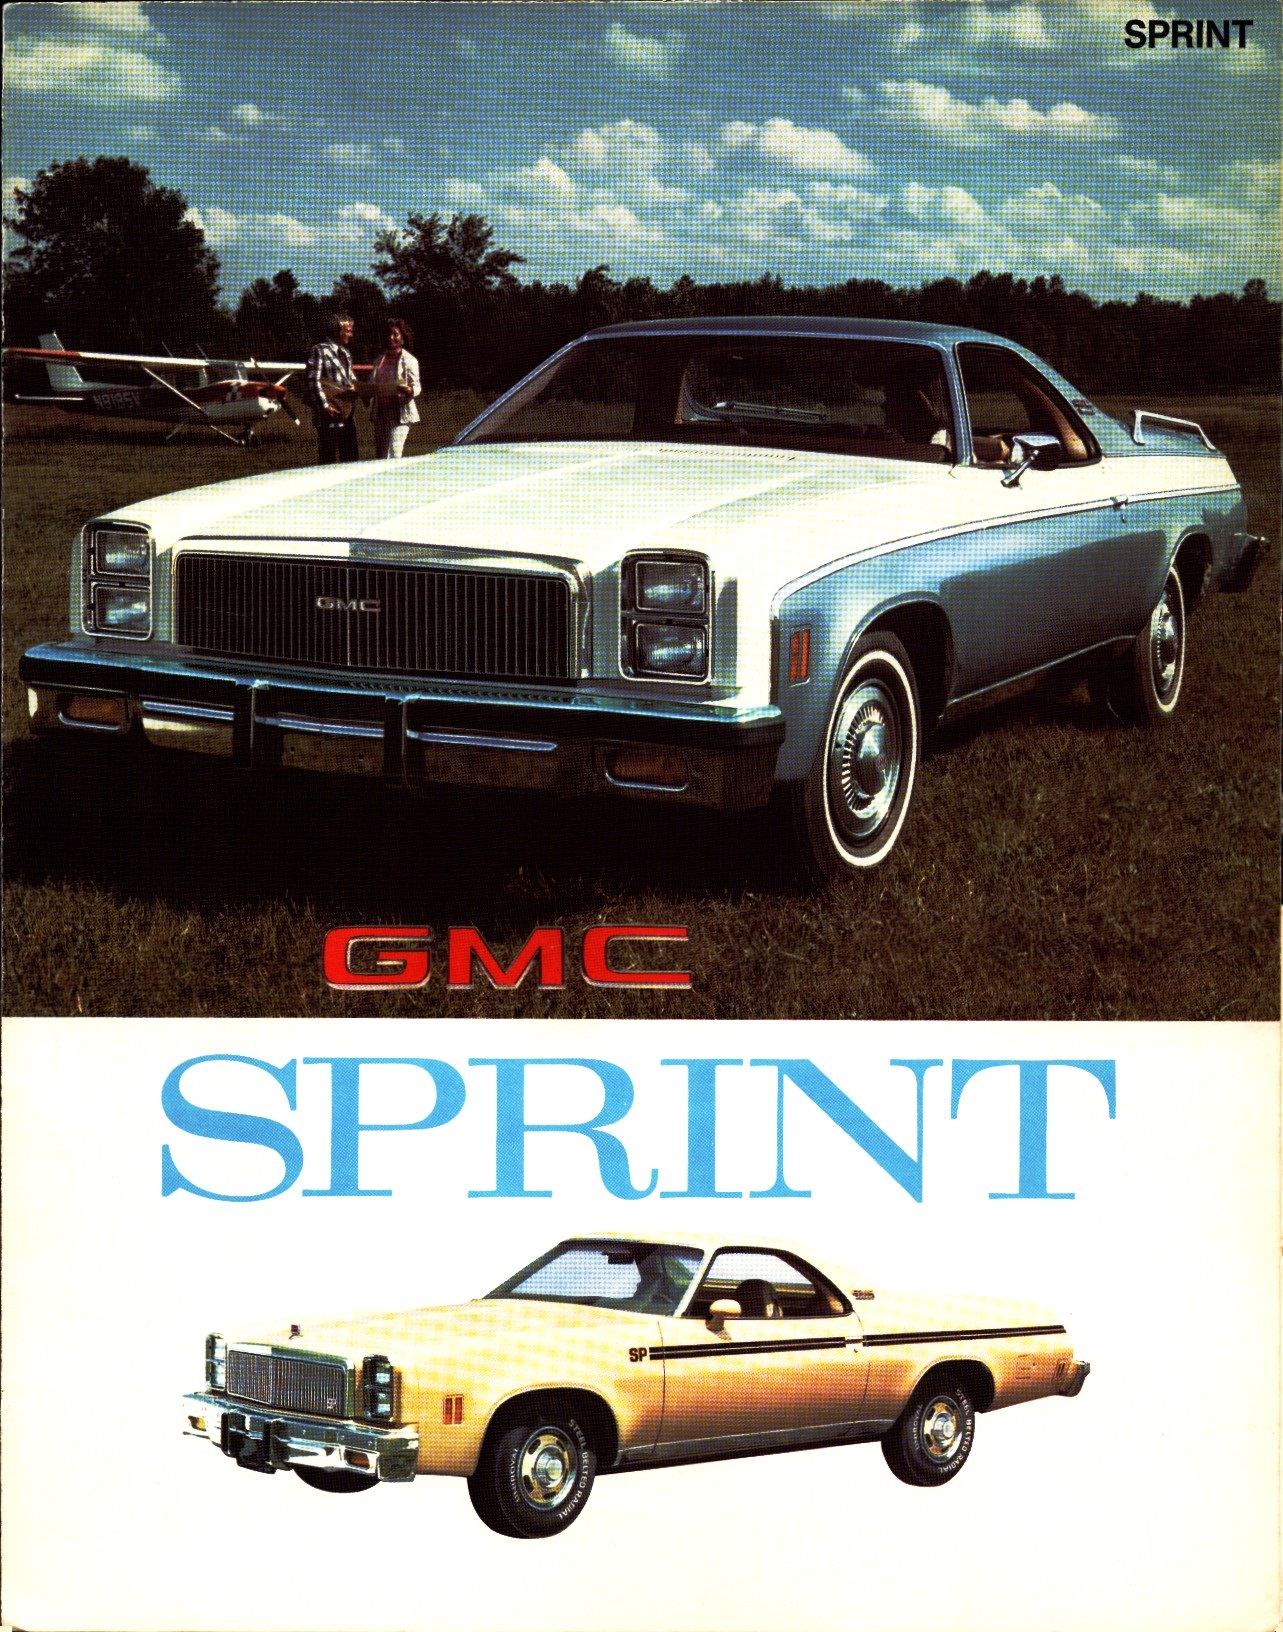 1977 GMC Sprint Brochure 01